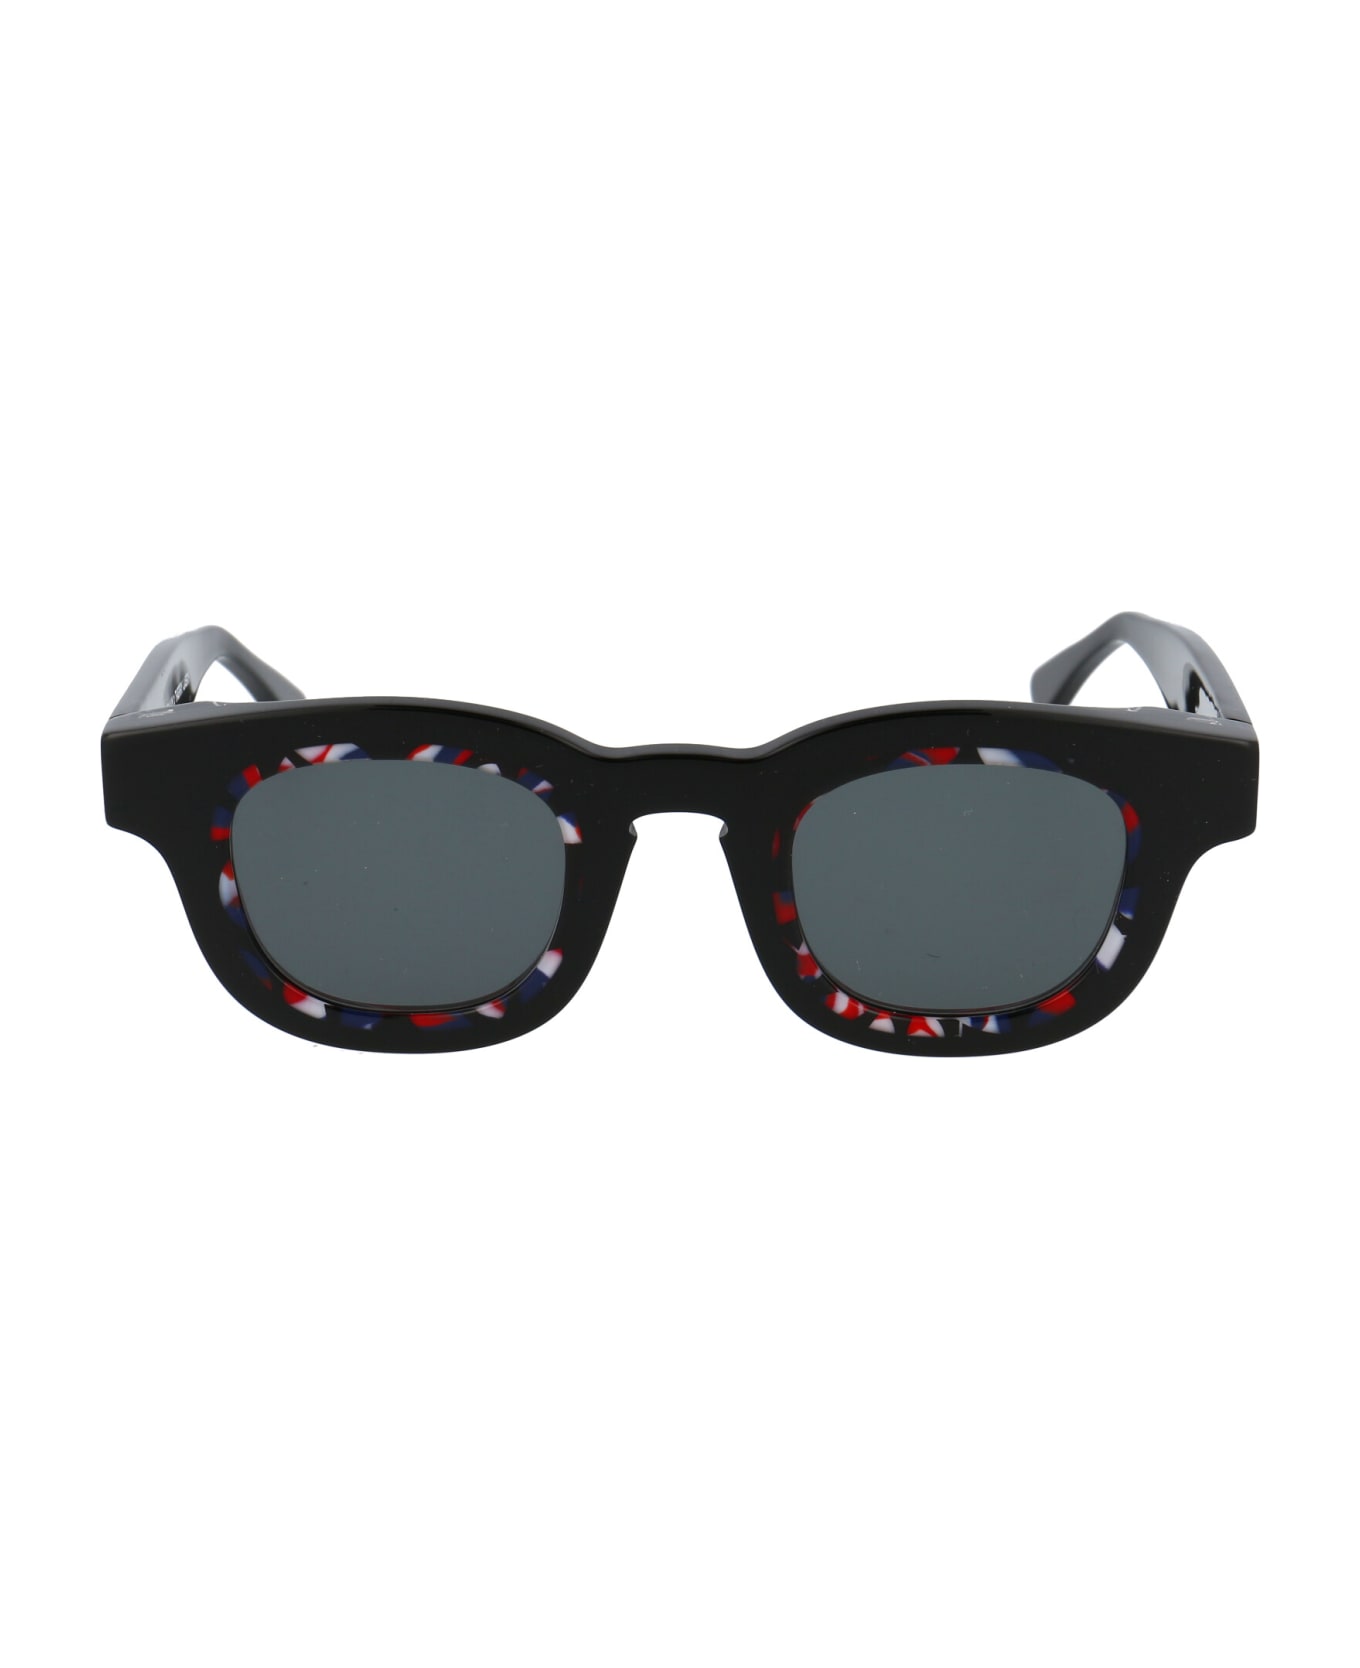 Thierry Lasry Psg X Thierry Lasry Sunglasses - 101 BLACK サングラス